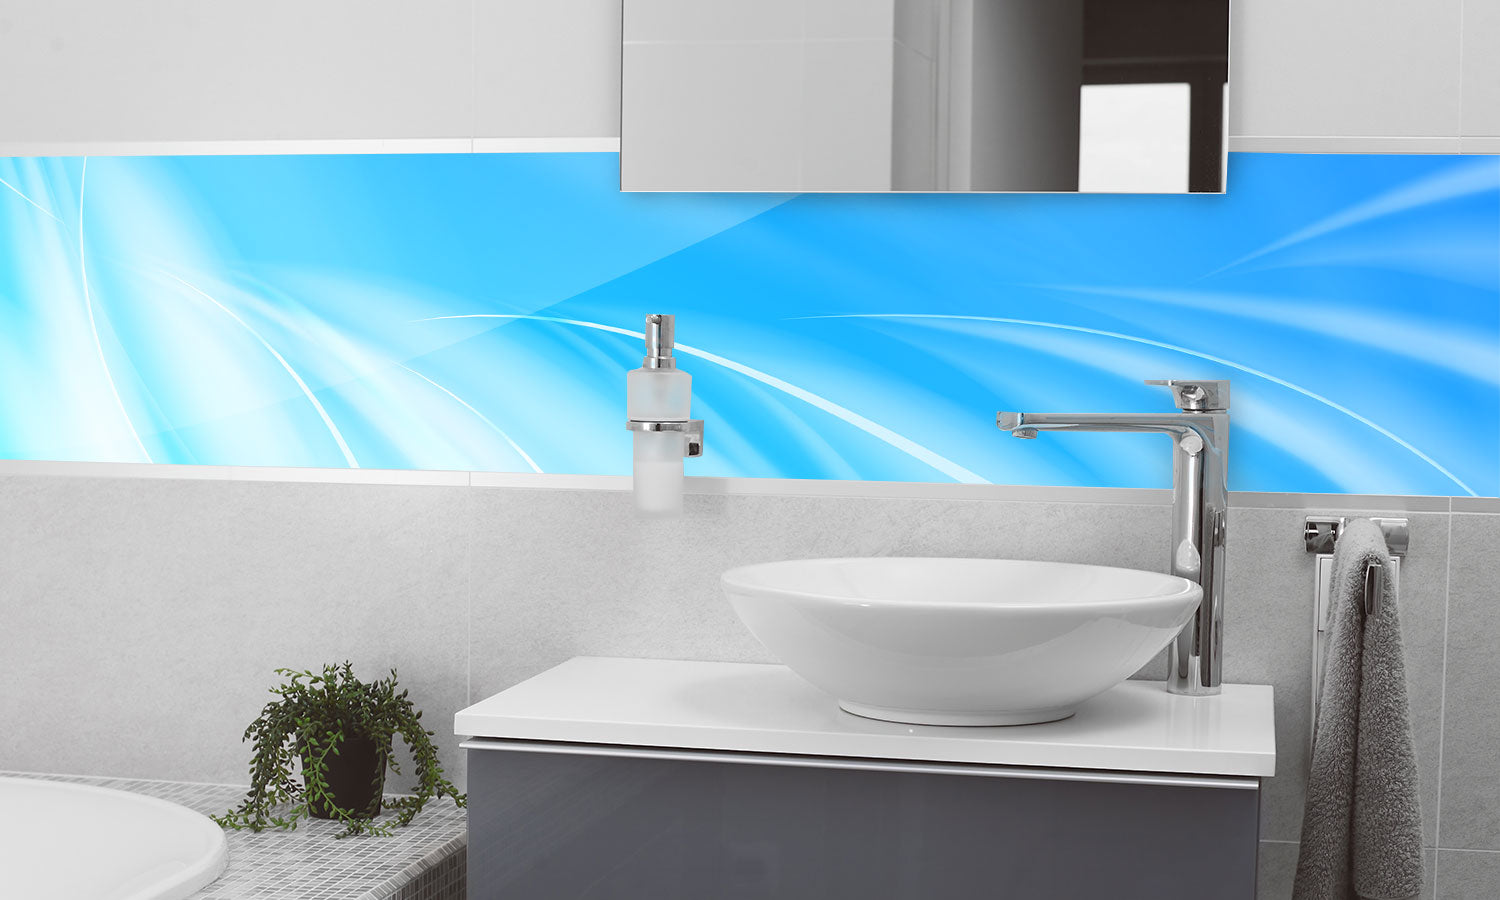 Paneli za kuhinje Abstract blue flames -  Stakleni / PVC ploče / Pleksiglas -  sa printom za kuhinju, Zidne obloge PKU138